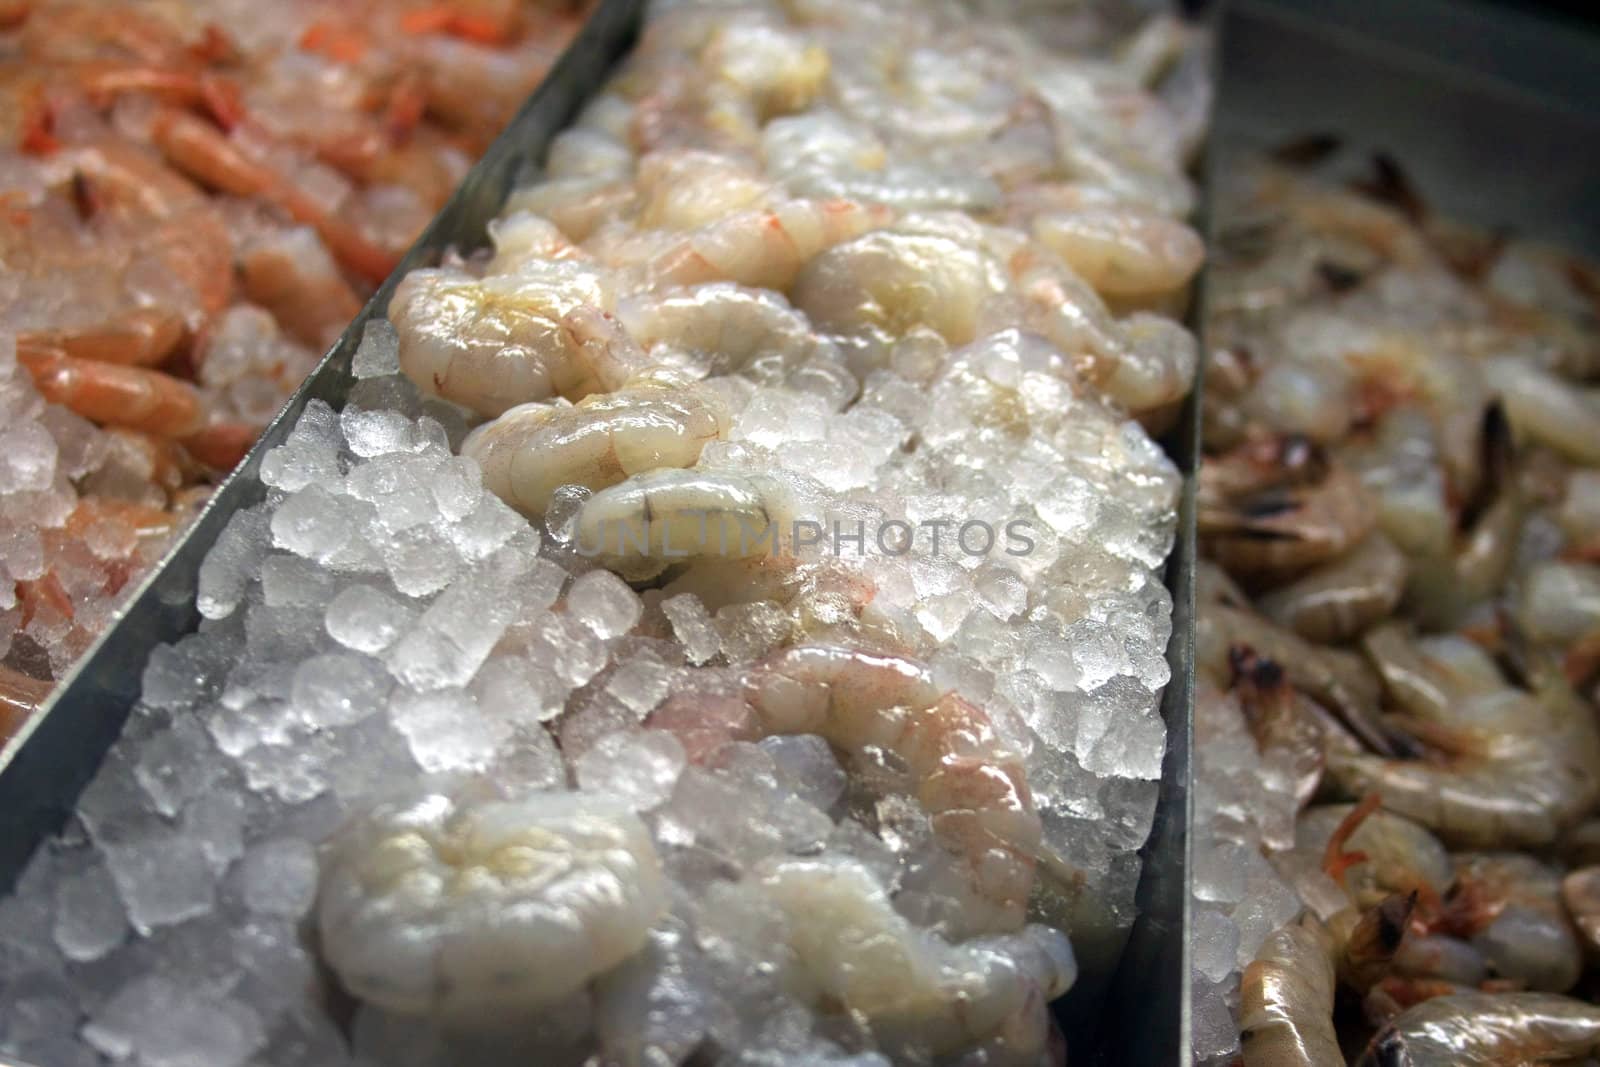 Piles of shrimp at a fish market